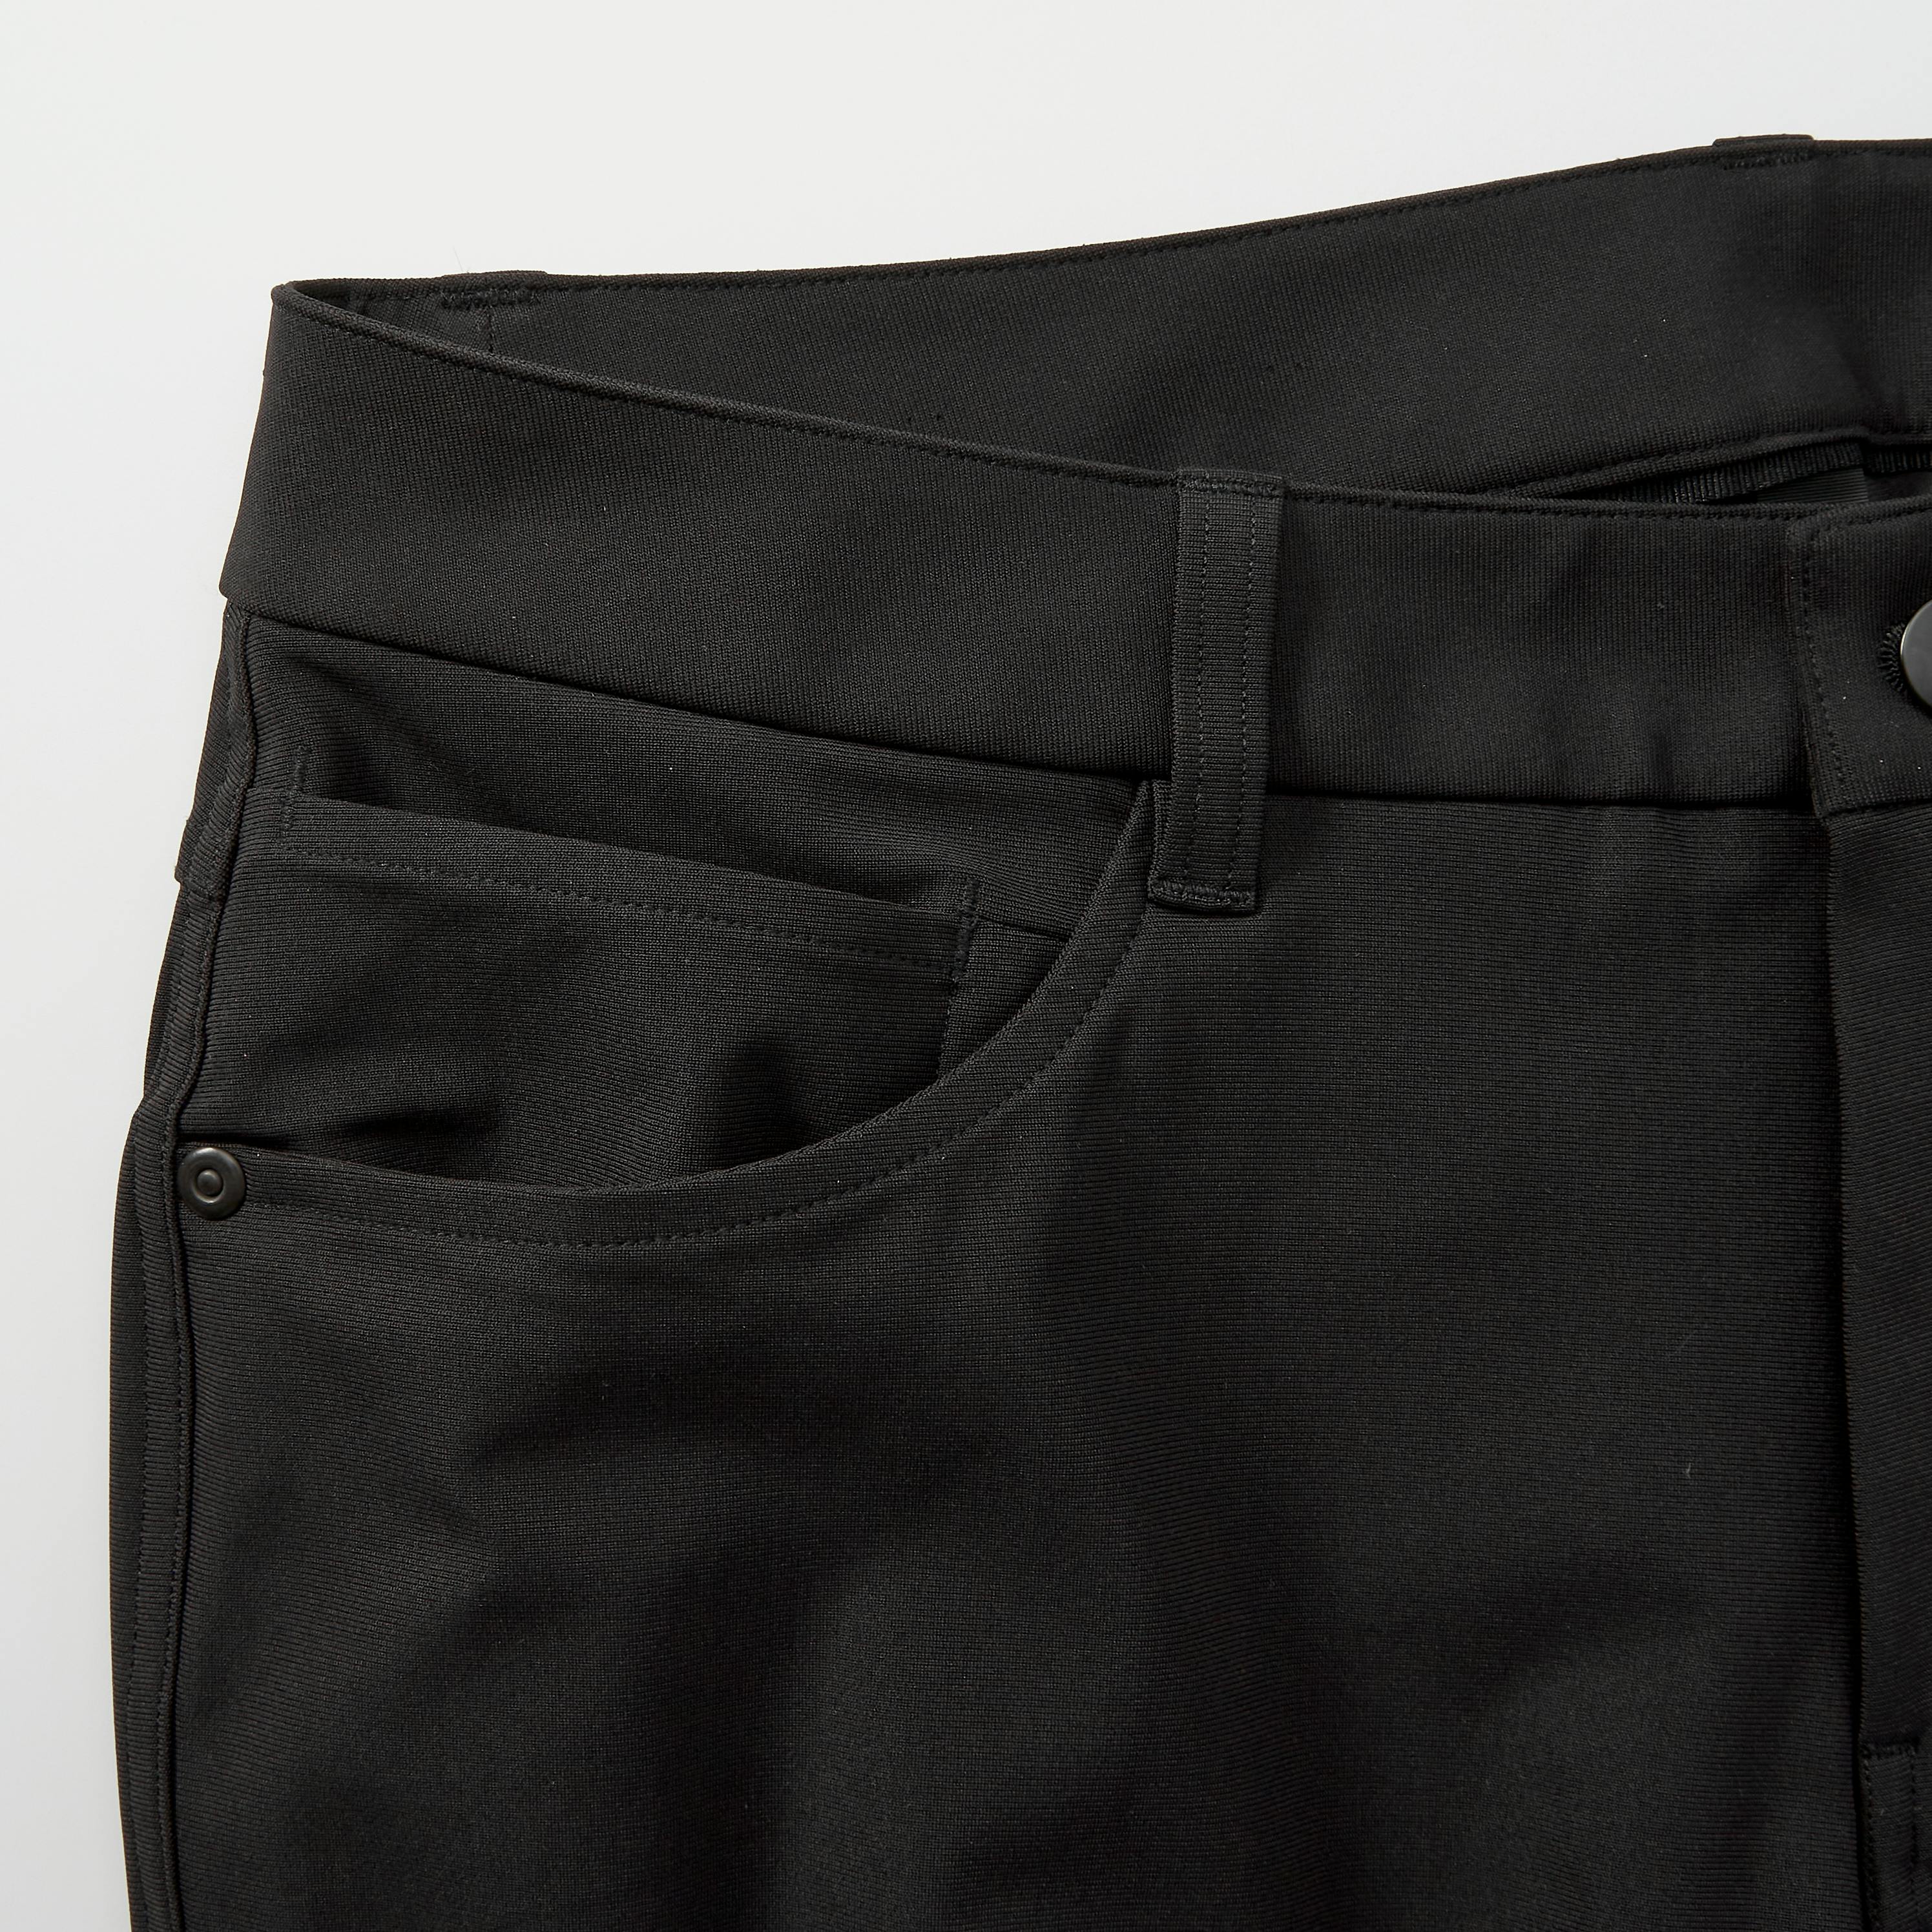 lululemon ABC SLIM 86 CM - Trousers - black - Zalando.de